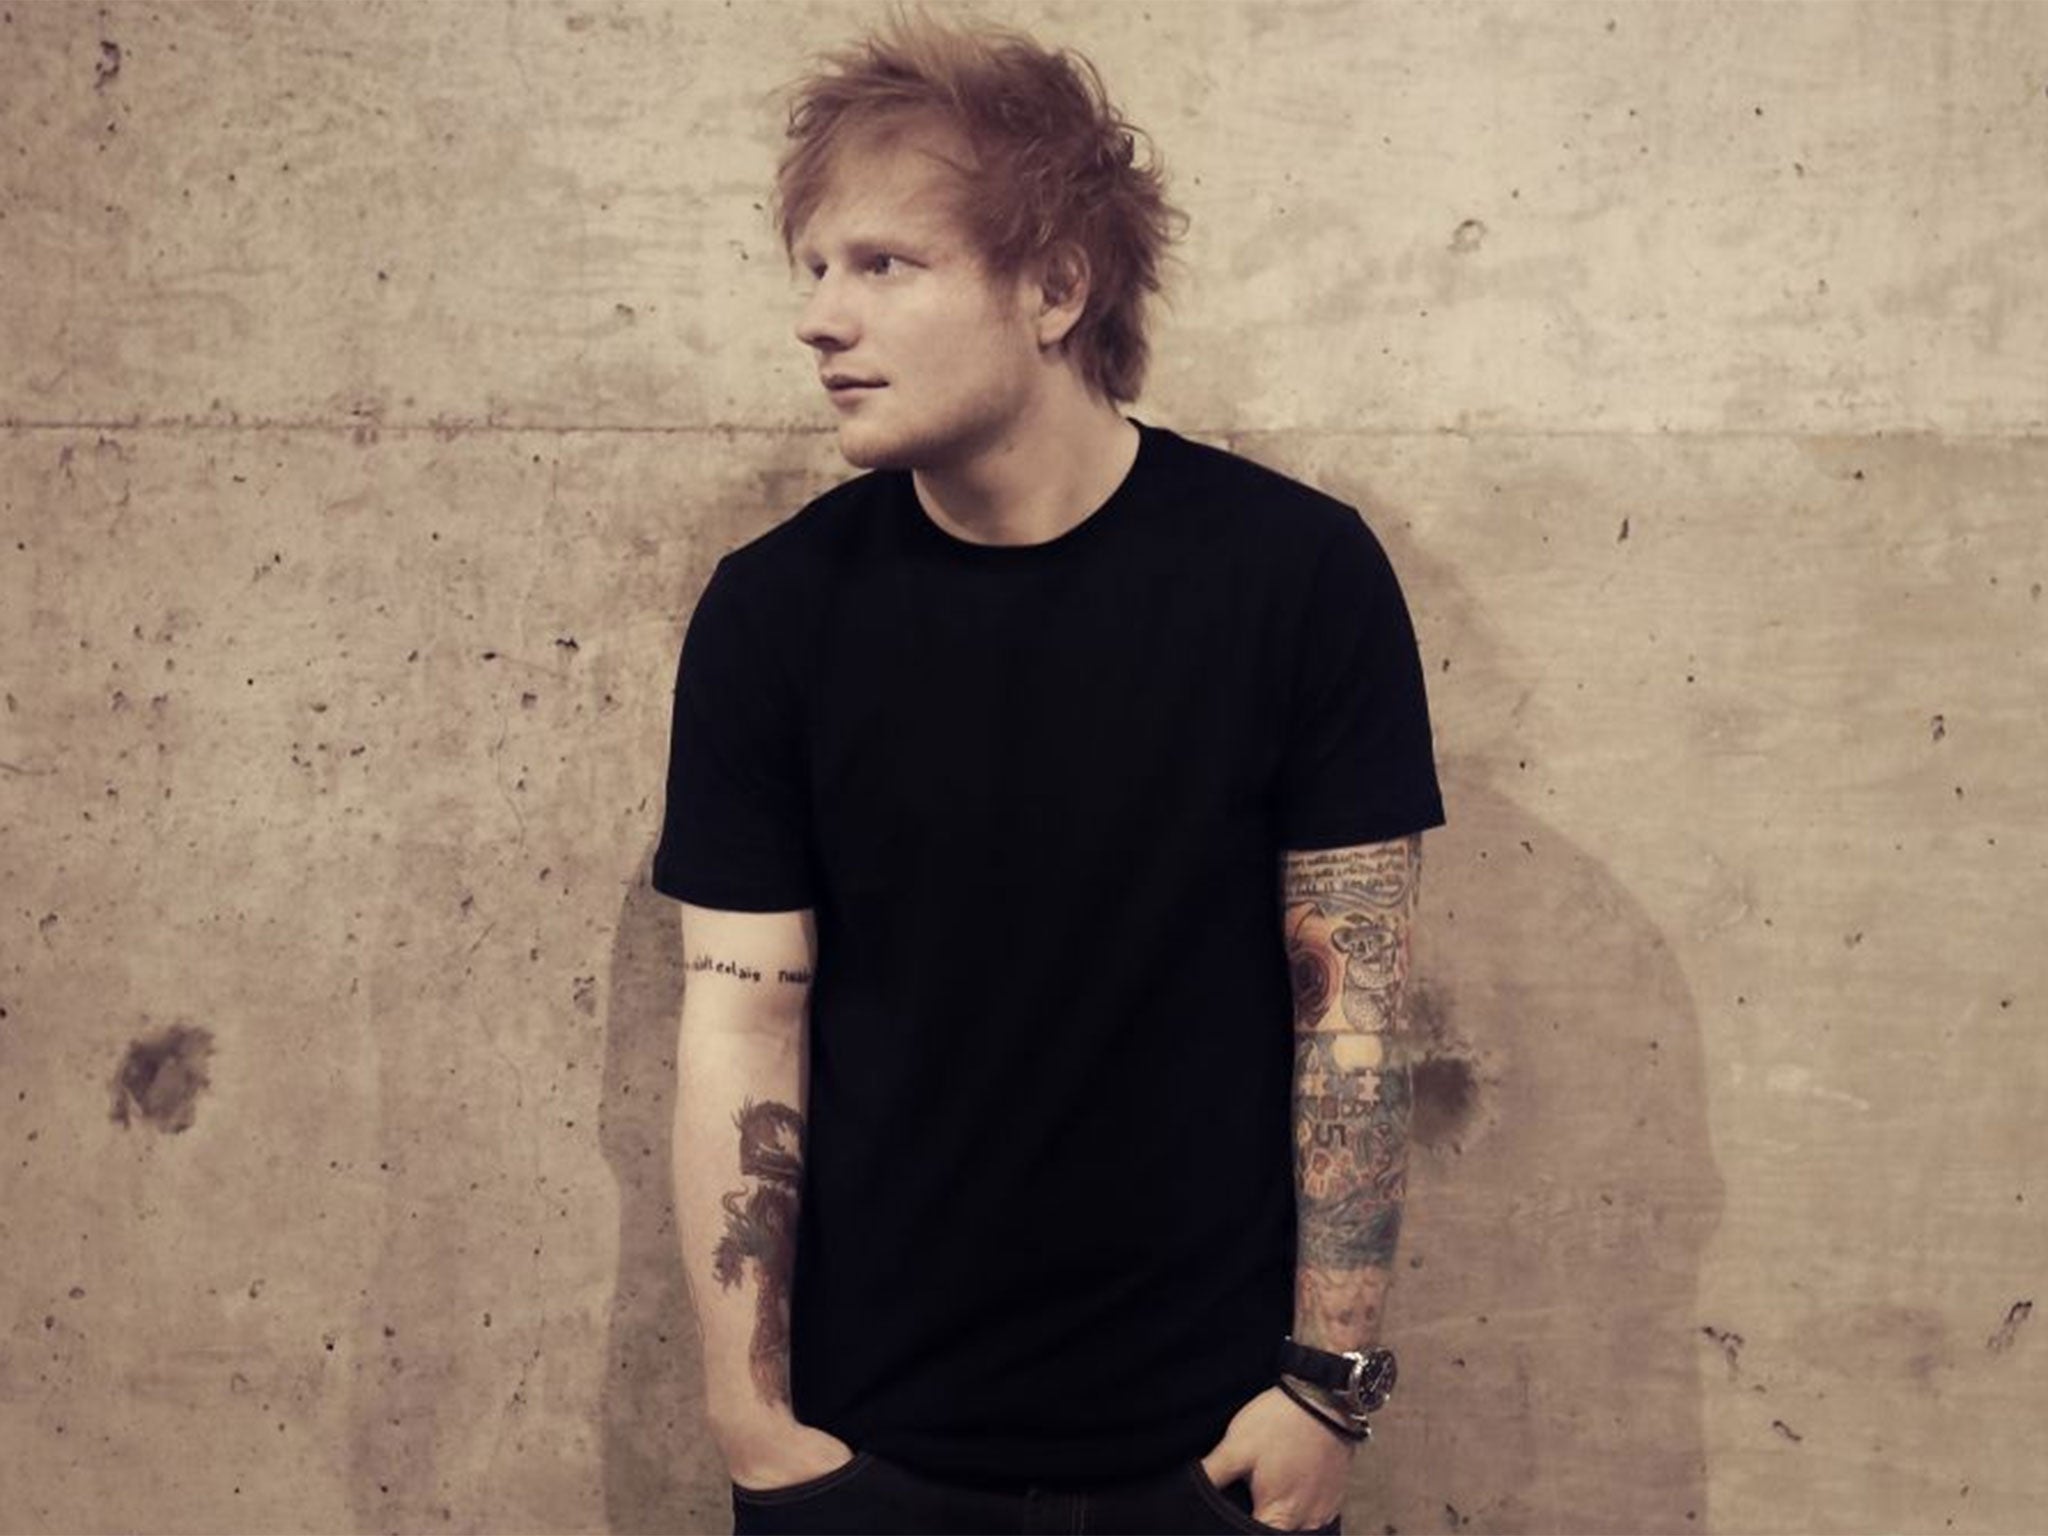 Ed Sheeran has topped the US album chart